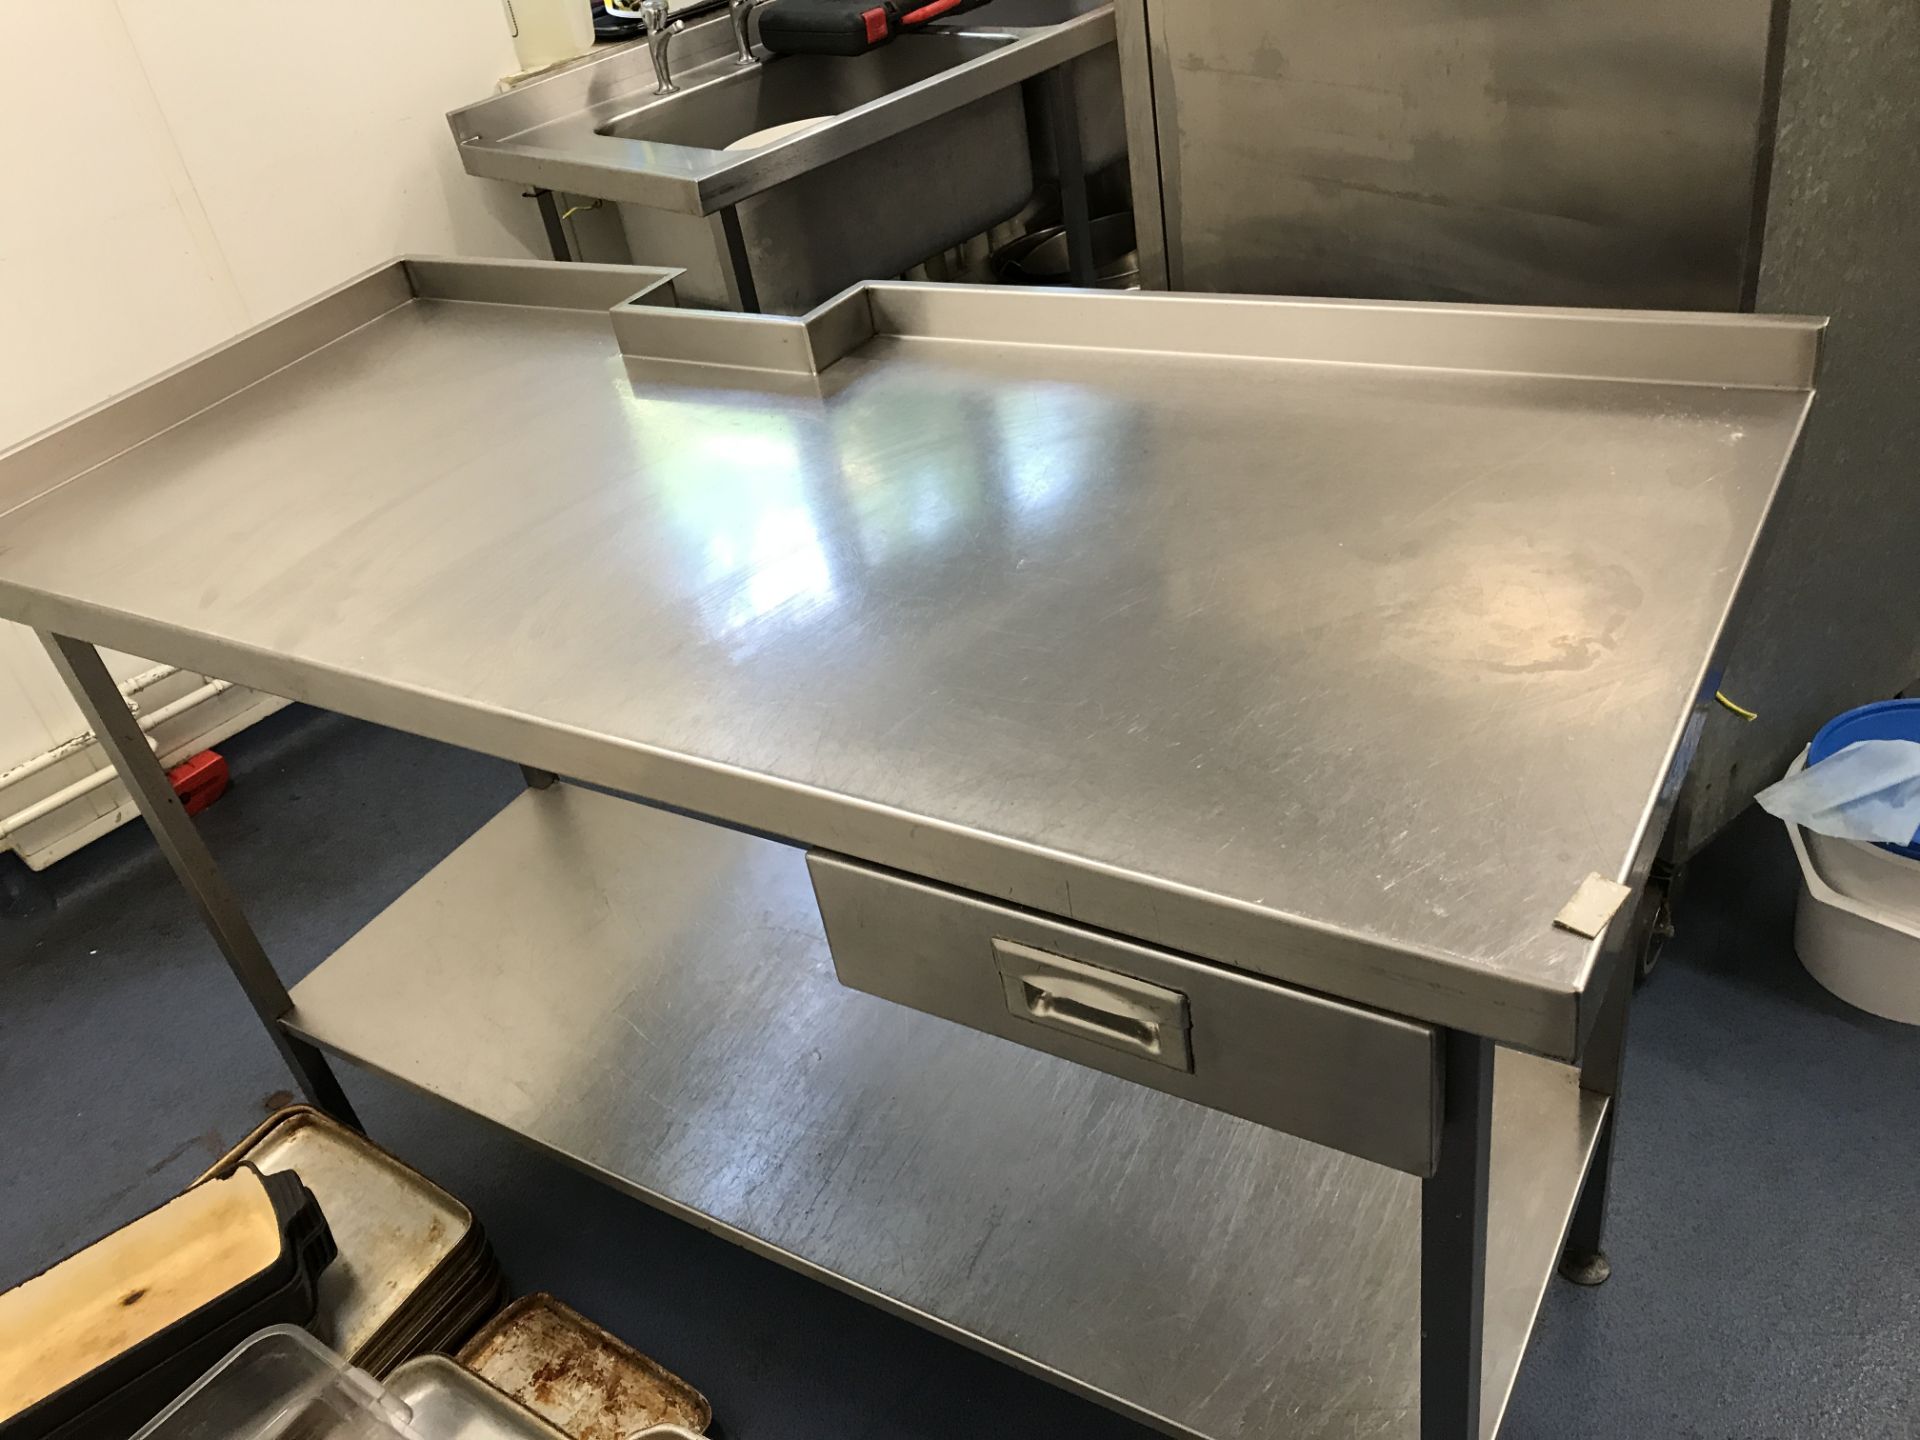 Stainless steel foor preparation table 150 x 65 x 86 cm with drawer, backsplash and undershelf